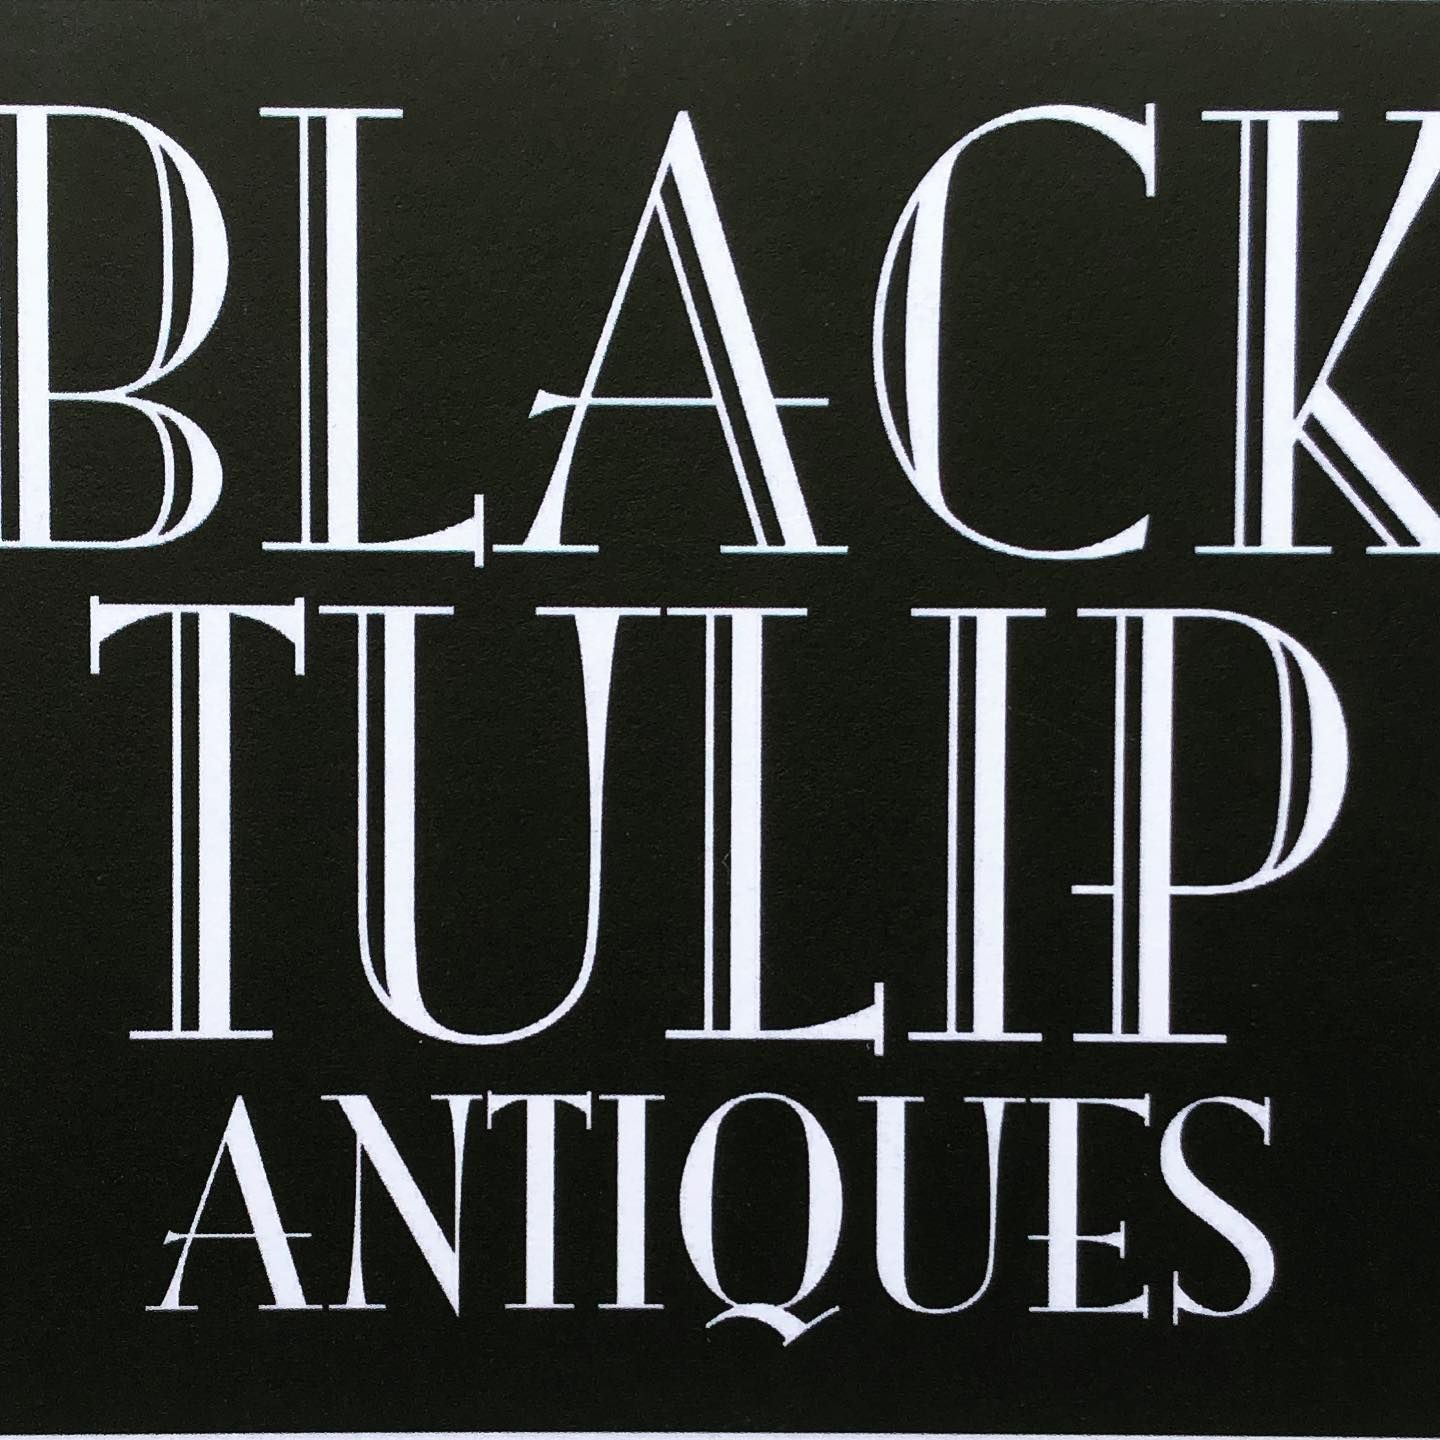 Black Tulip Antiques  - Denver, Colorado 80210